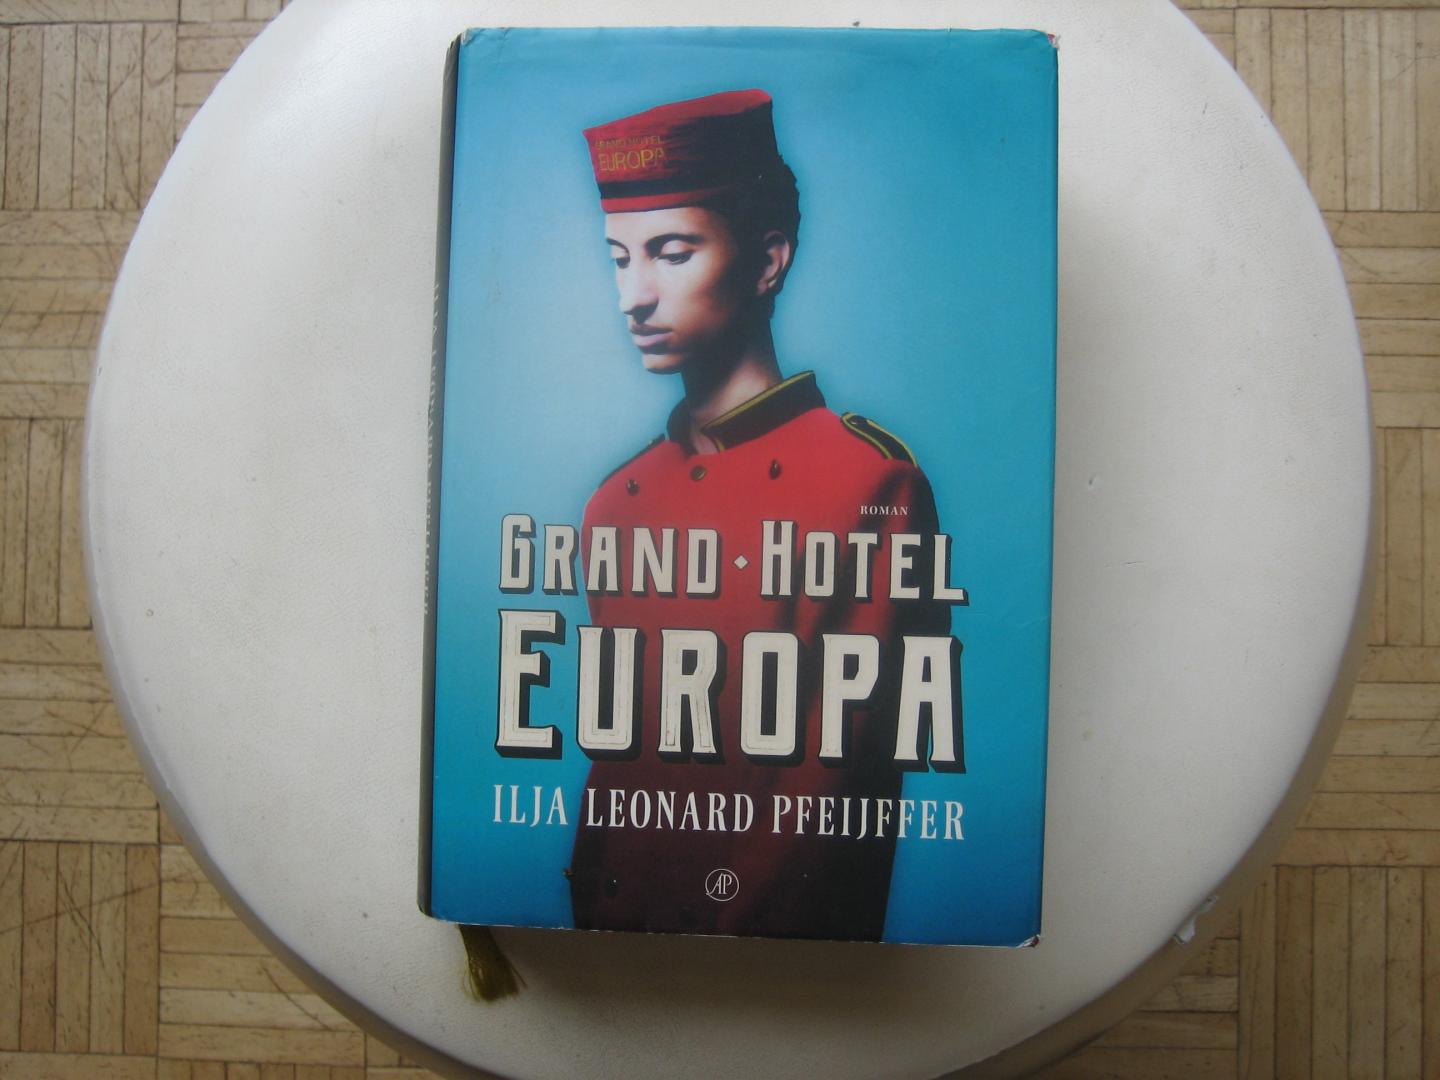 Ilja Leonard Pfeijffer - Grand Hotel Europa / GESIGNEERD door Ilja Leonard Pfeijffer